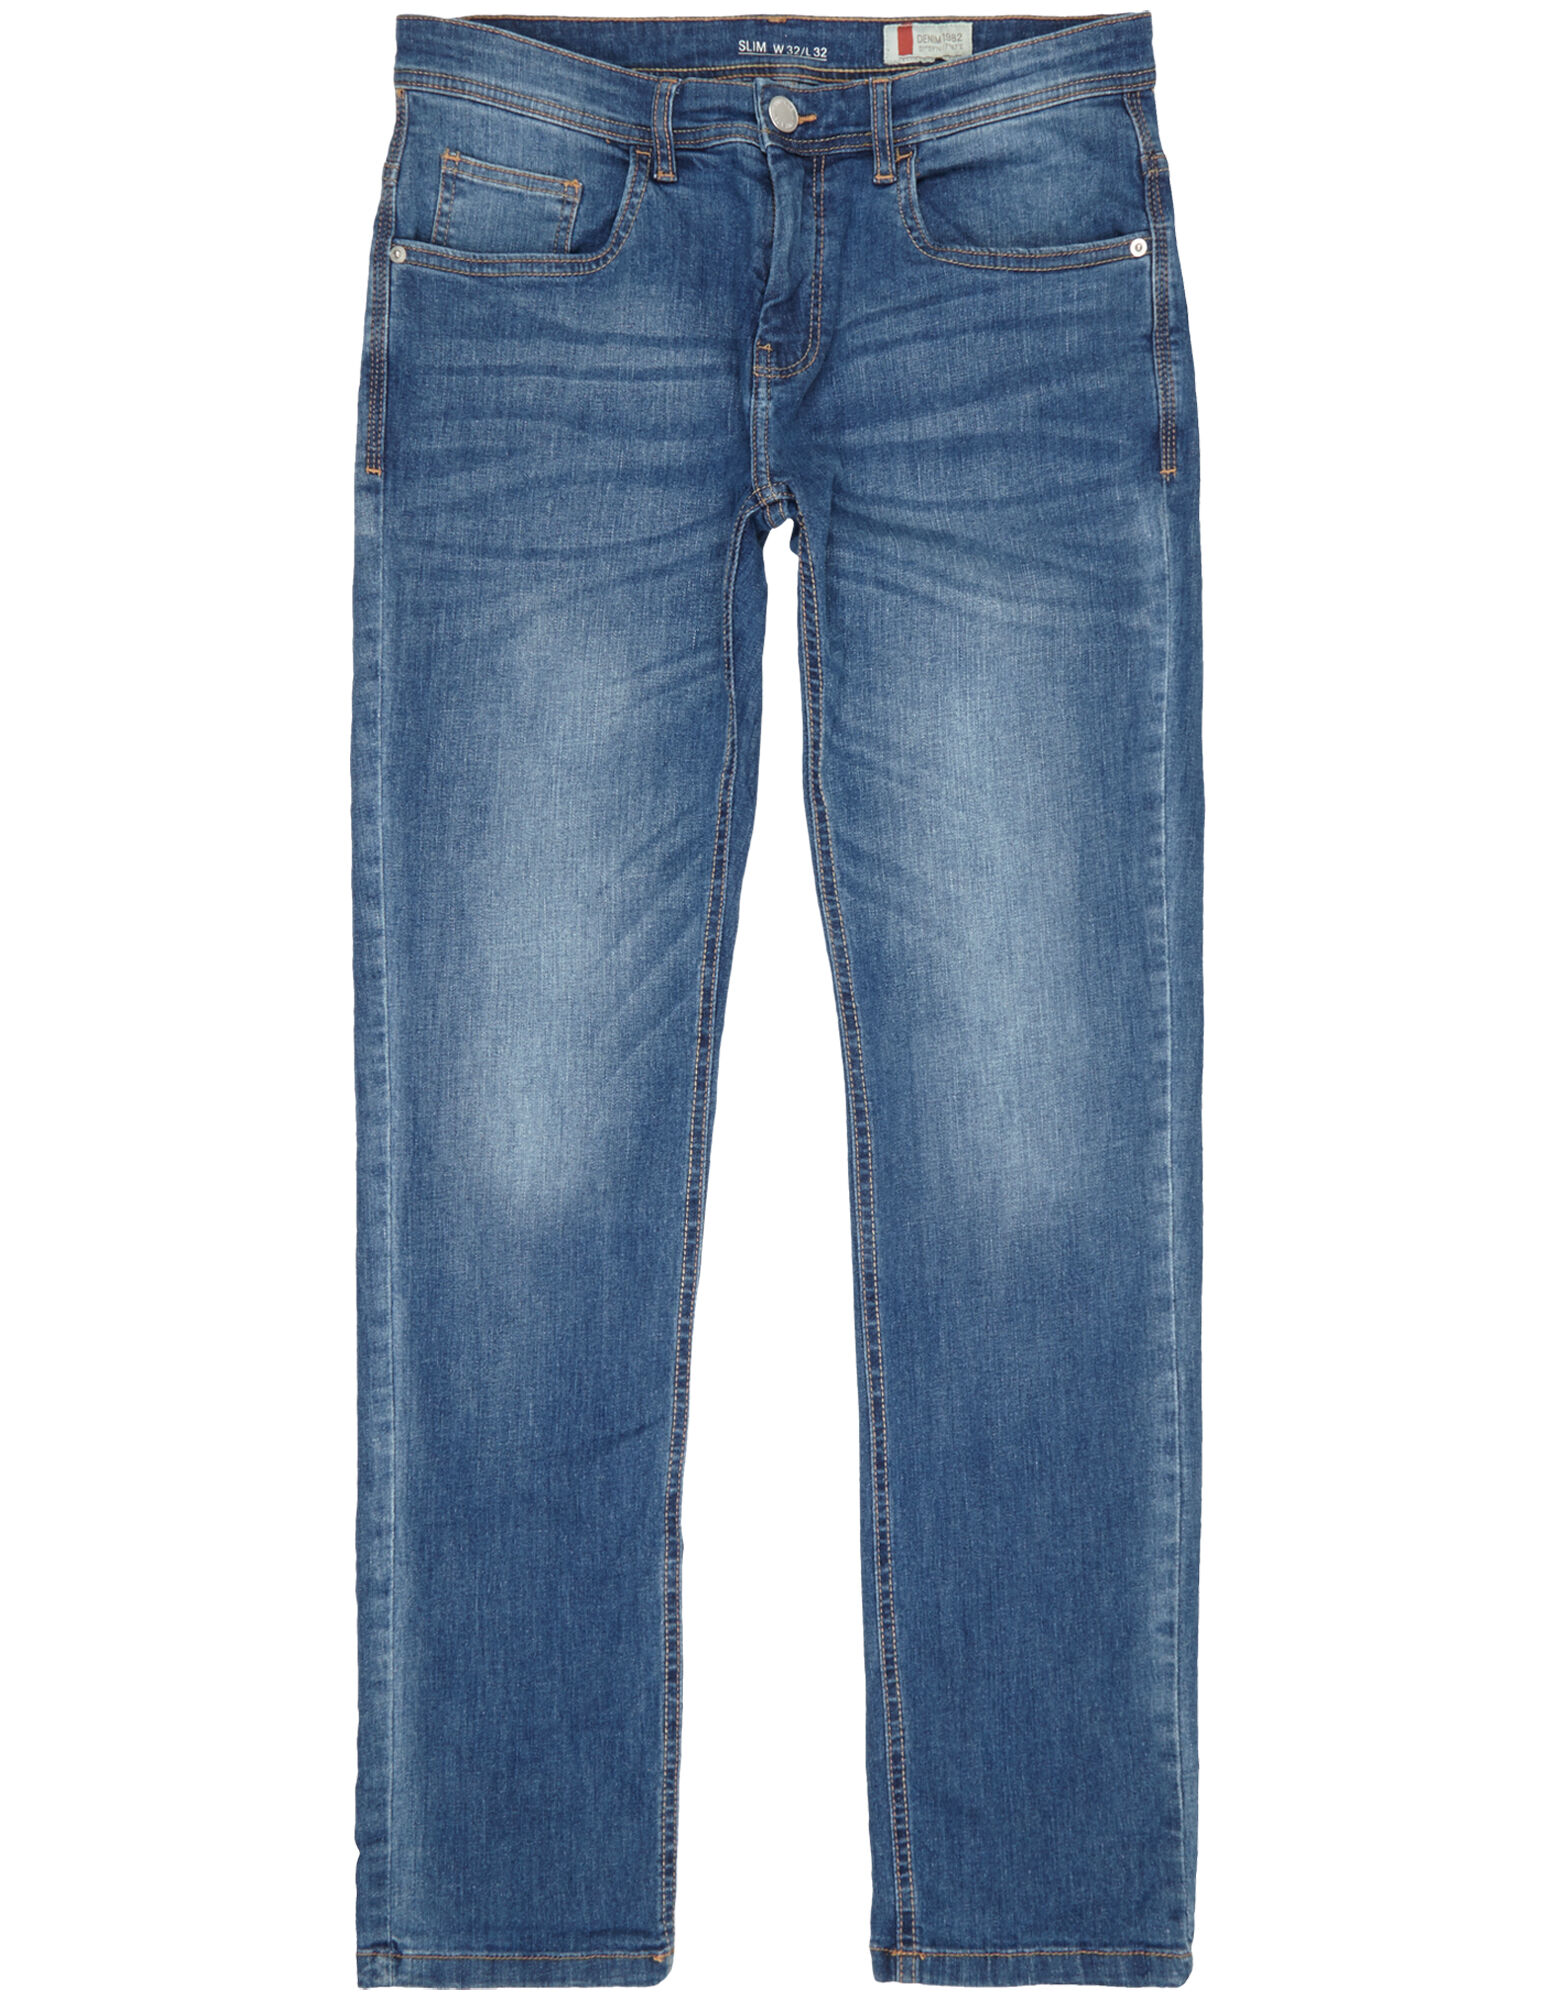 denim 1982 jeans